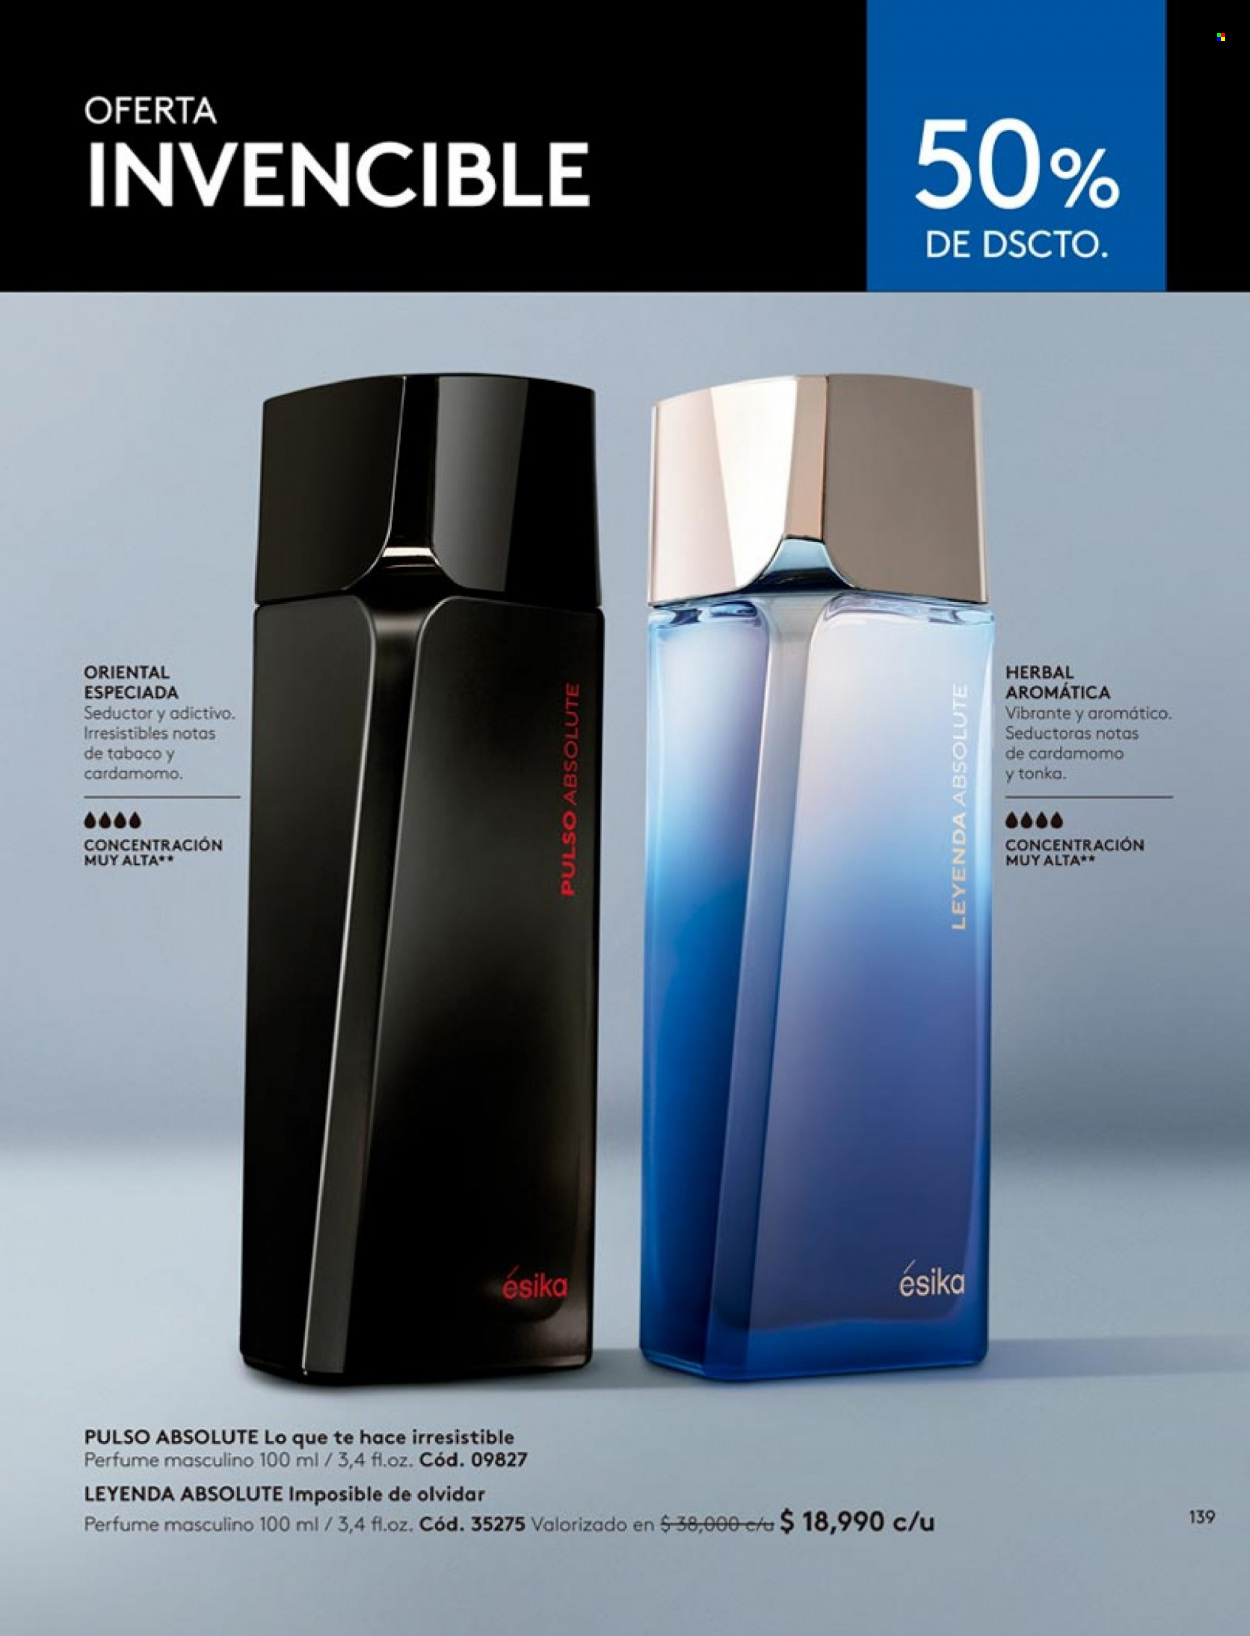 Catálogo Ésika - Ventas - perfume. Página 139.